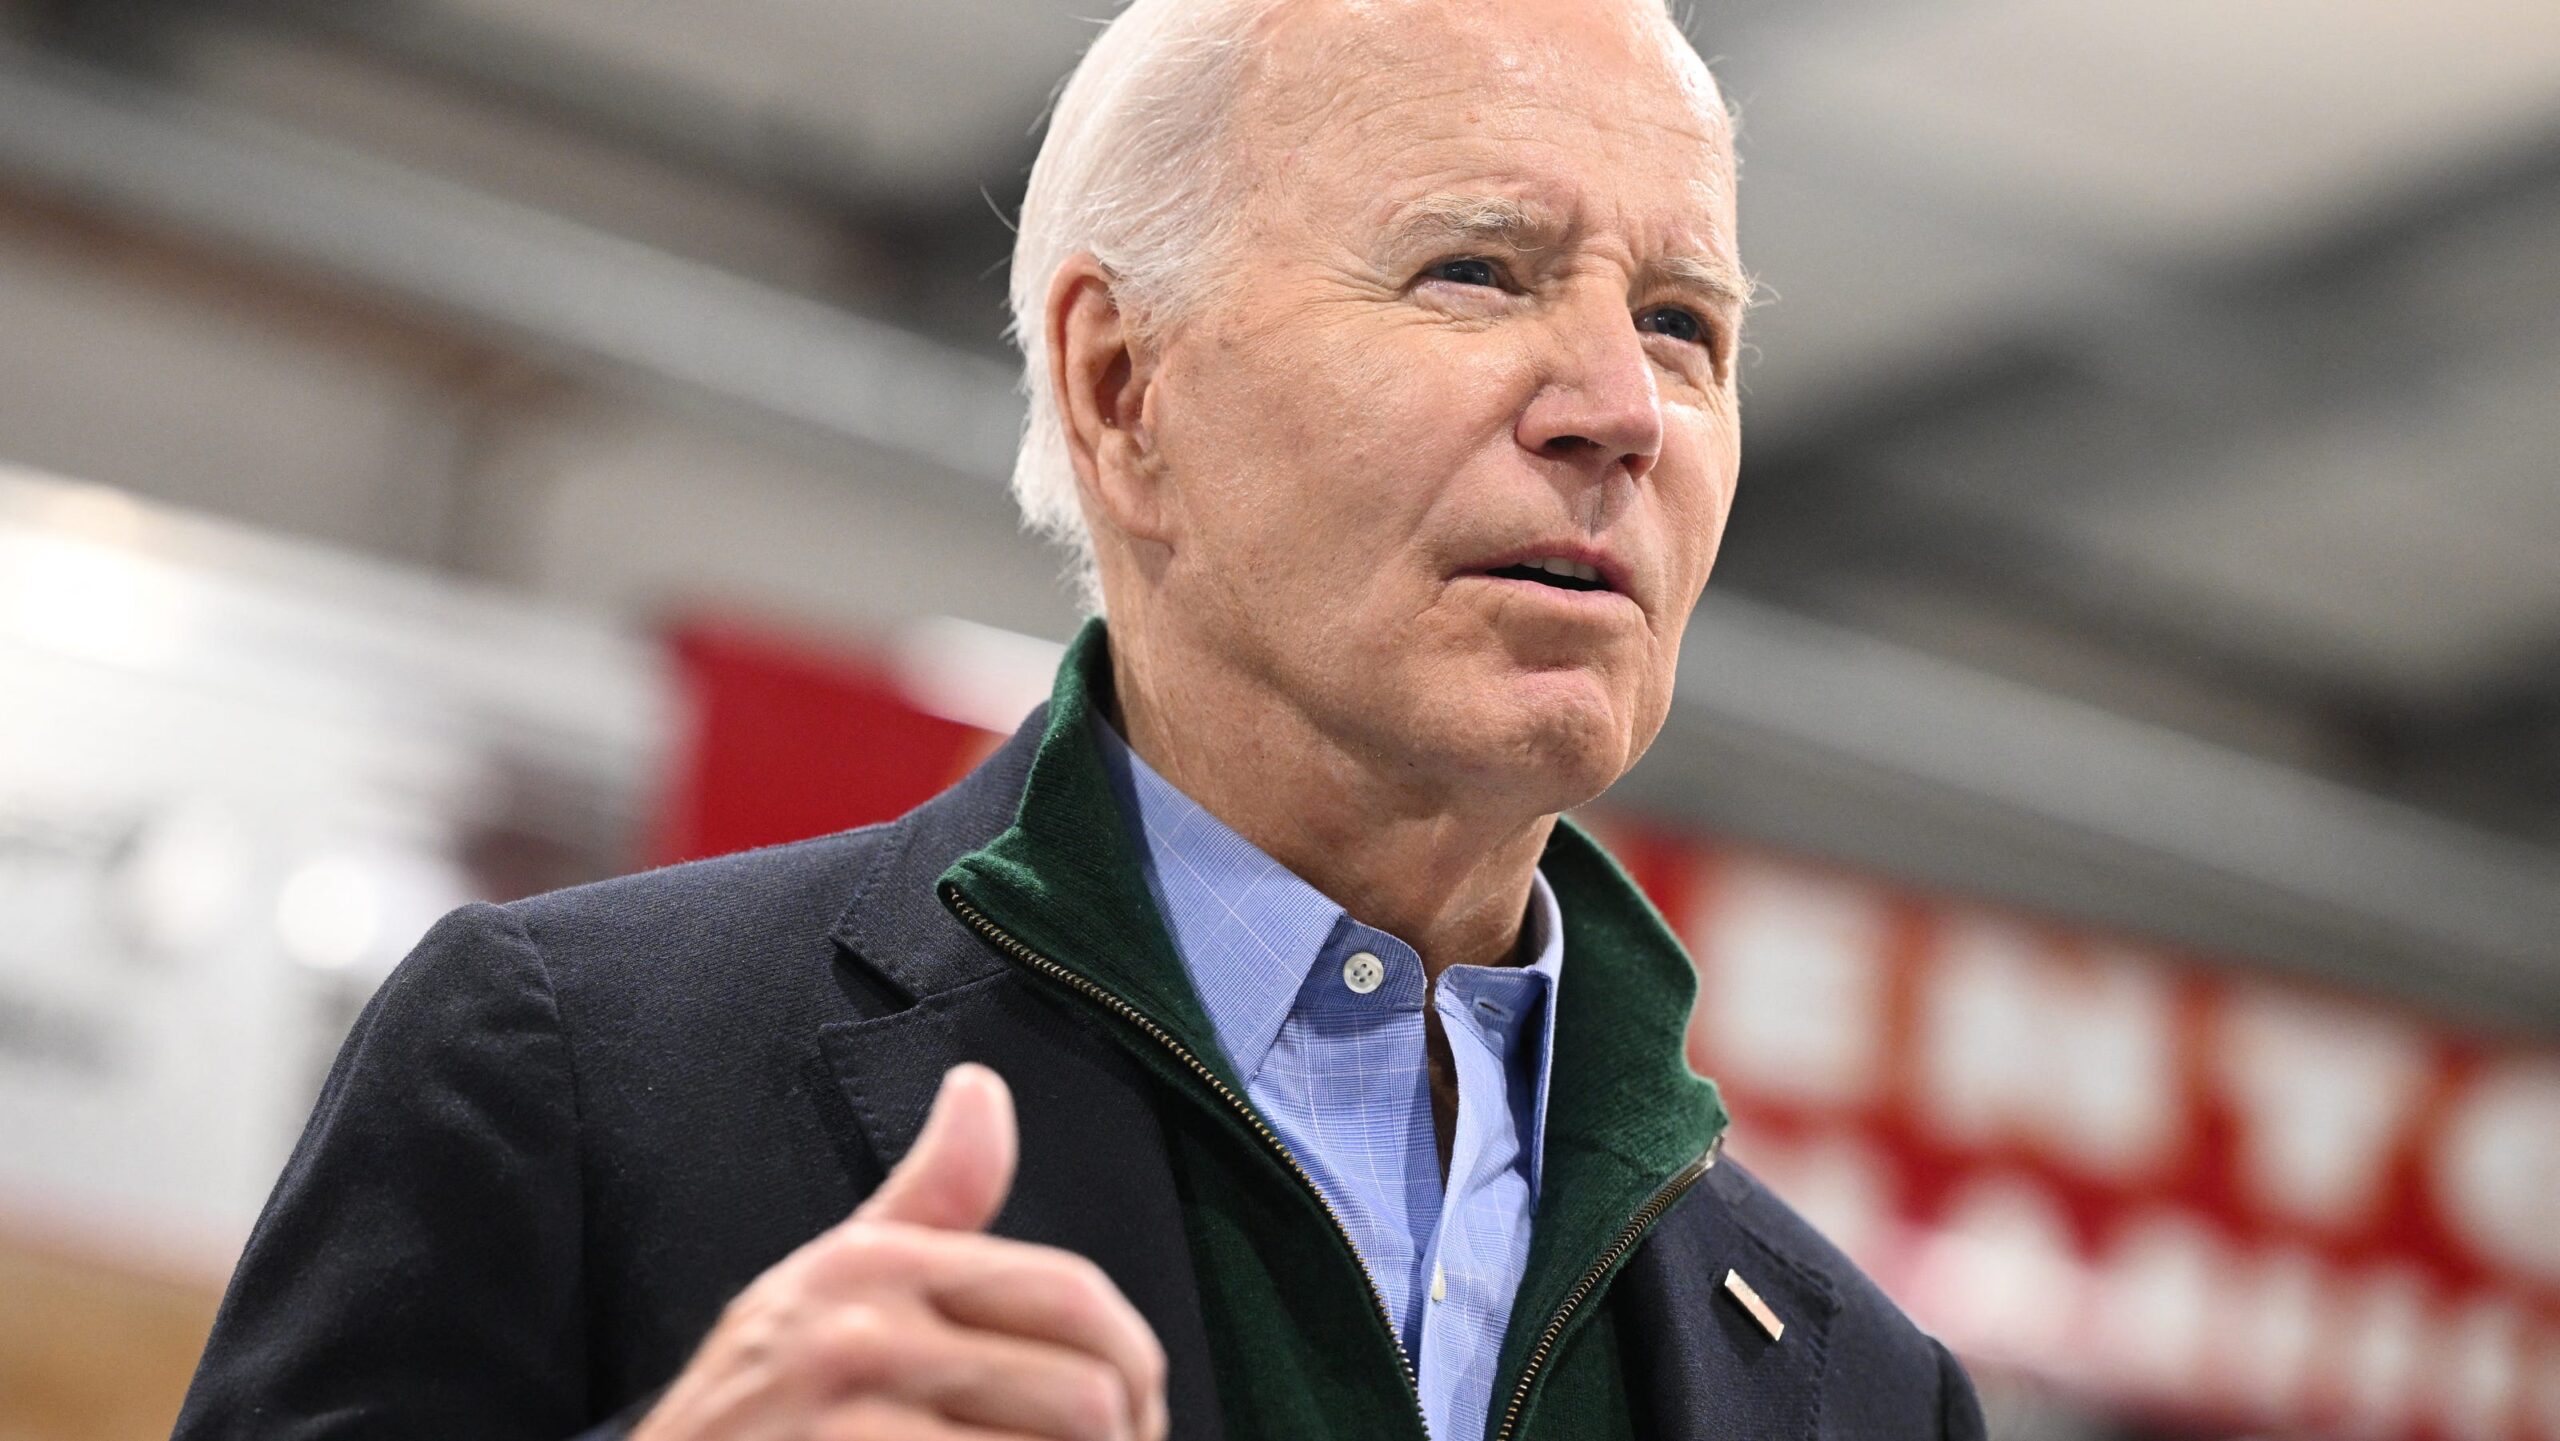 Biden campaign raised $97 million in 4th quarter, set war chest record